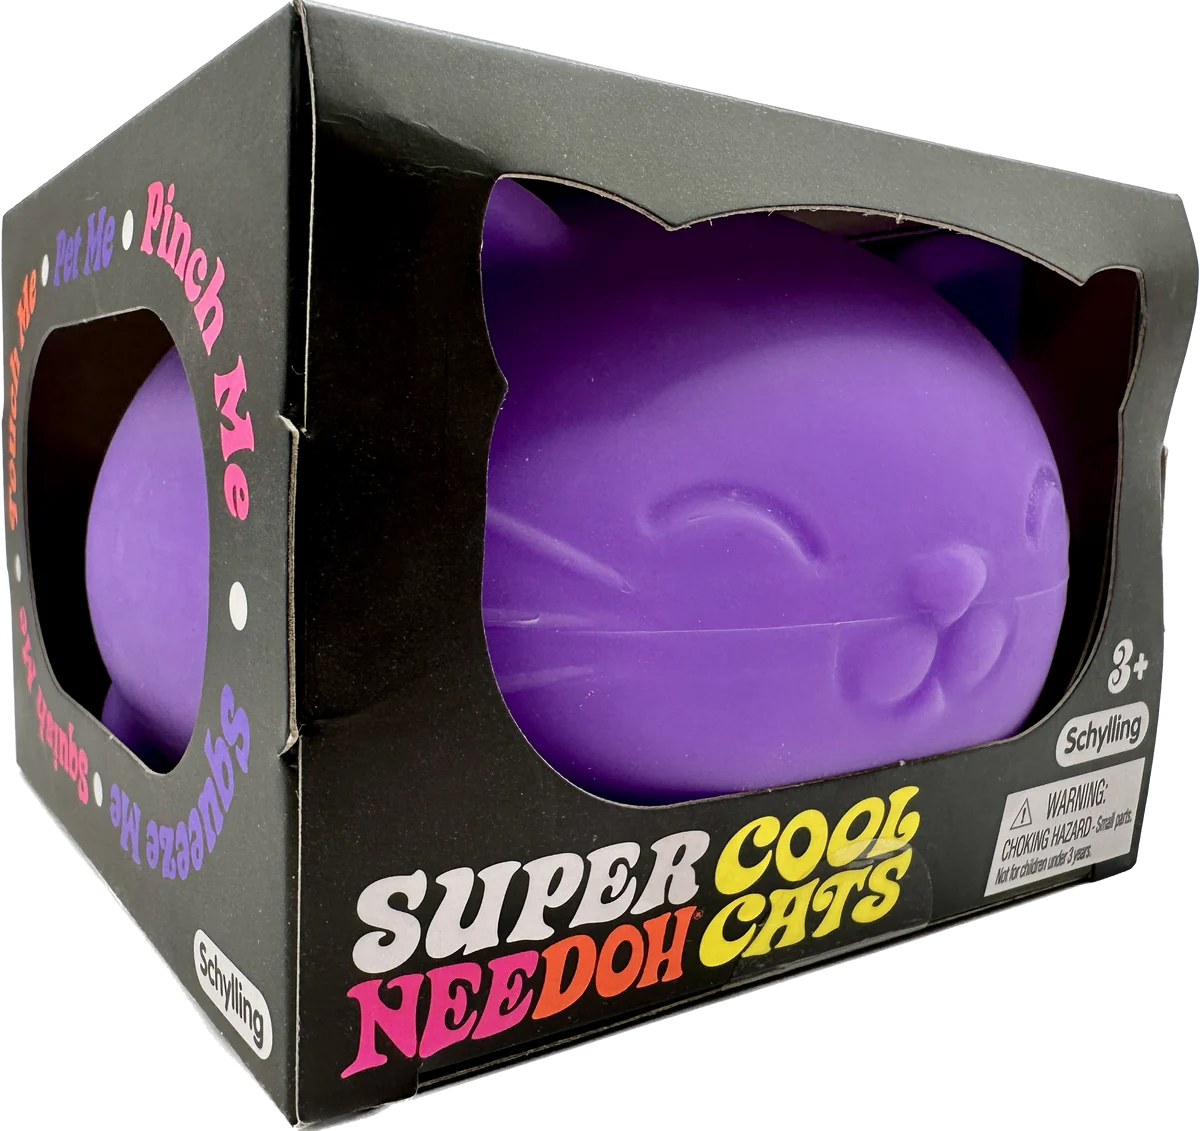 Super NeeDoh: Cool Cats